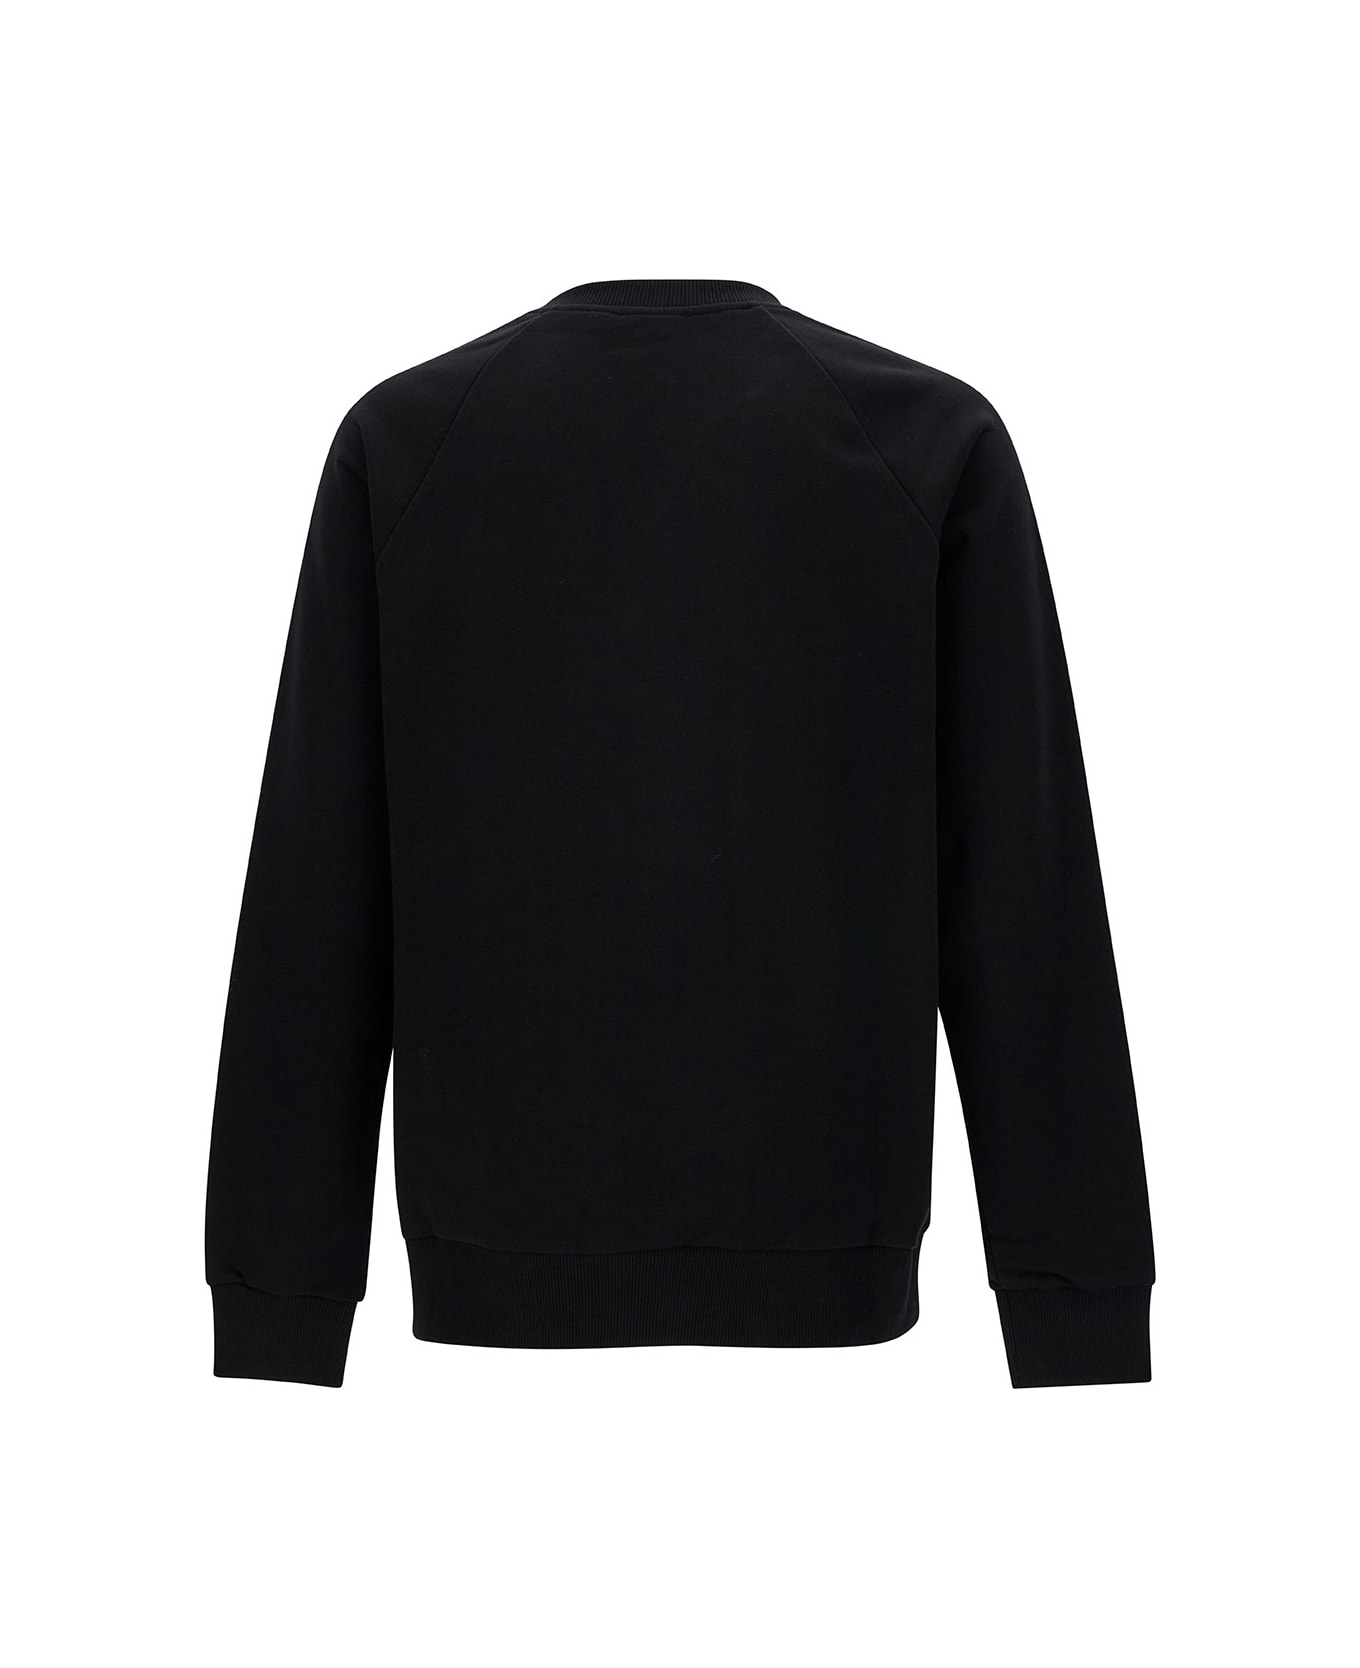 Balmain Black Crewneck Sweatshirt With Contrasting Logo Print At The Front In Cotton Man - Black